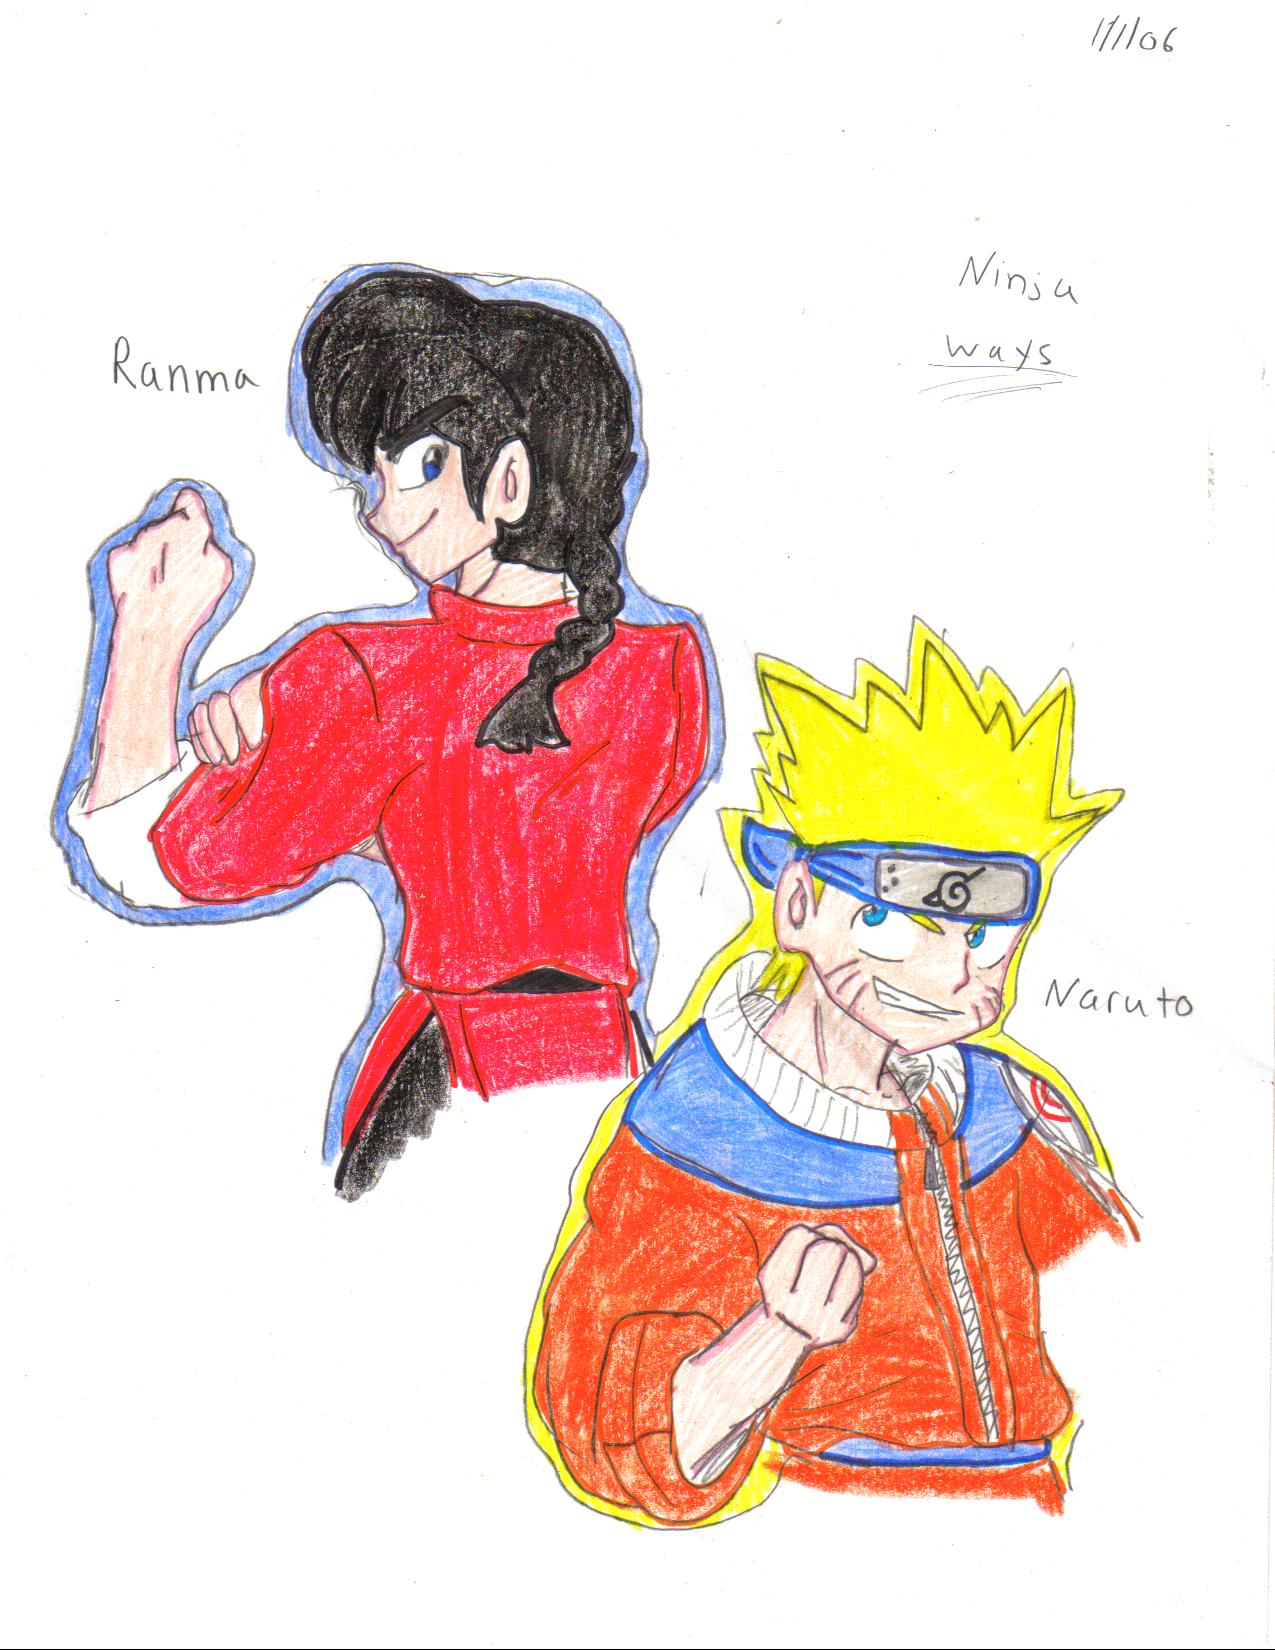 Ranma and Naruto by crocdragon89